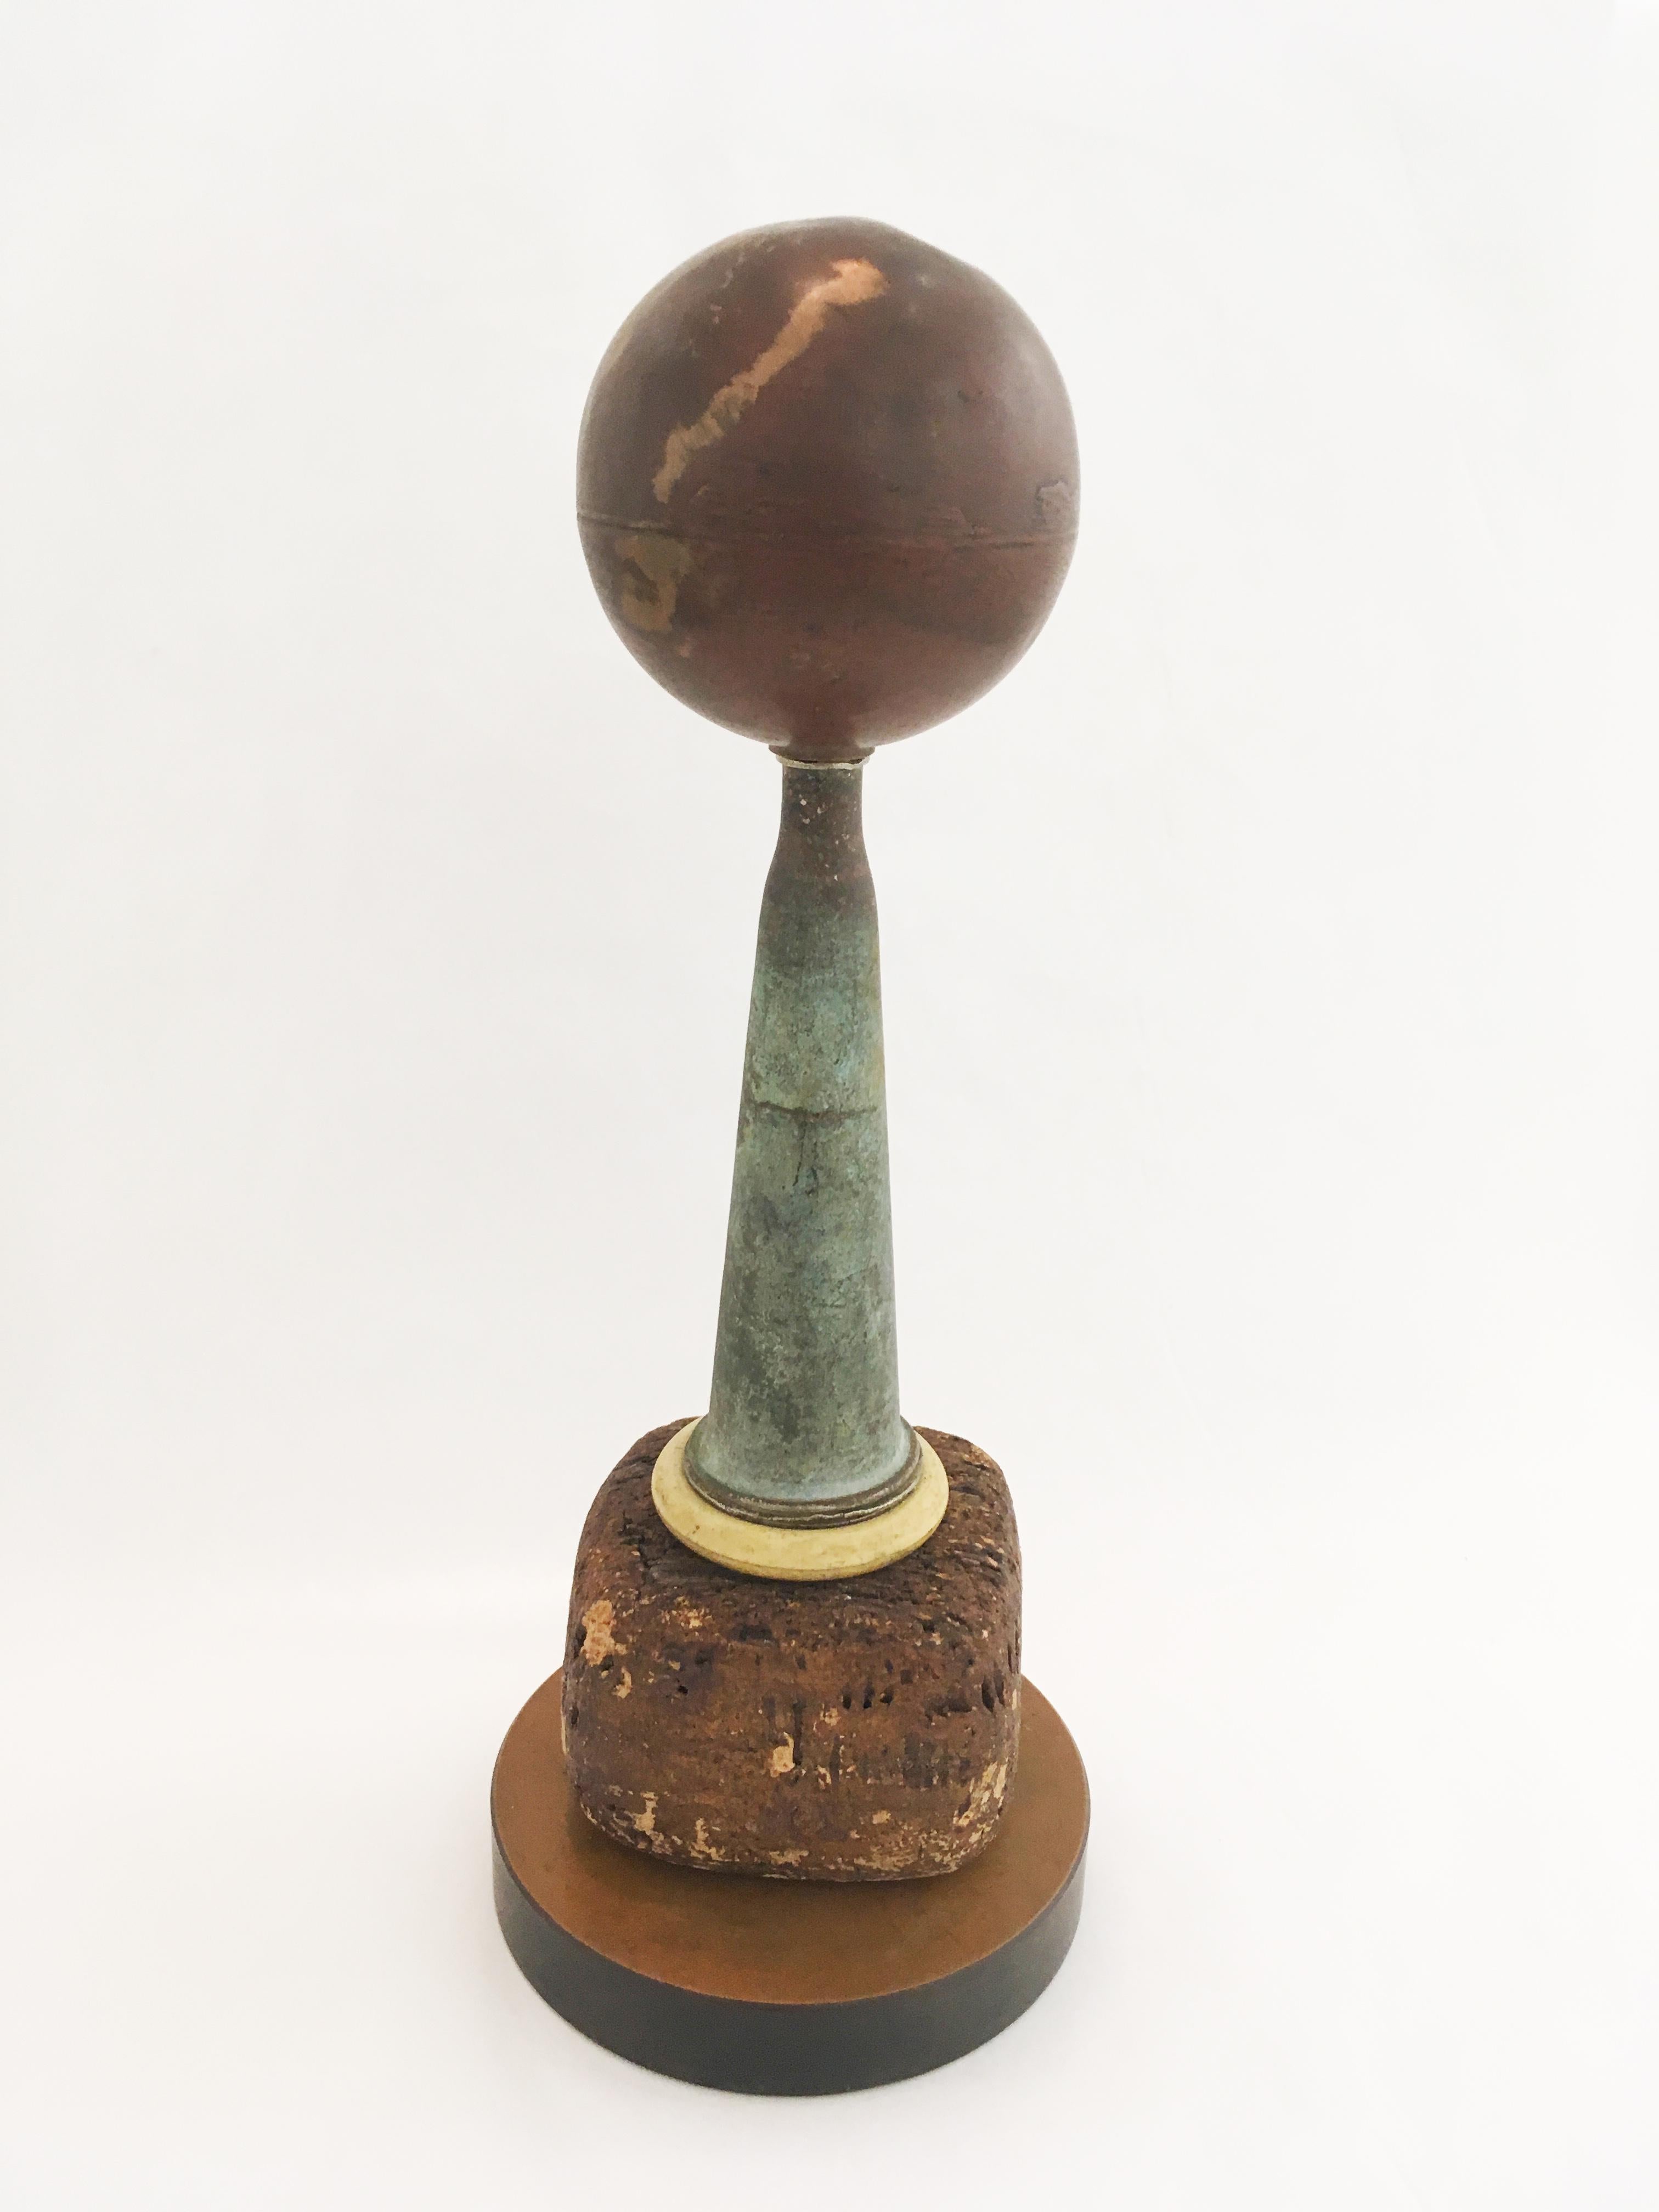 Tensionless, cork, copper, brass, celluloid, resin, found object sculpture 2